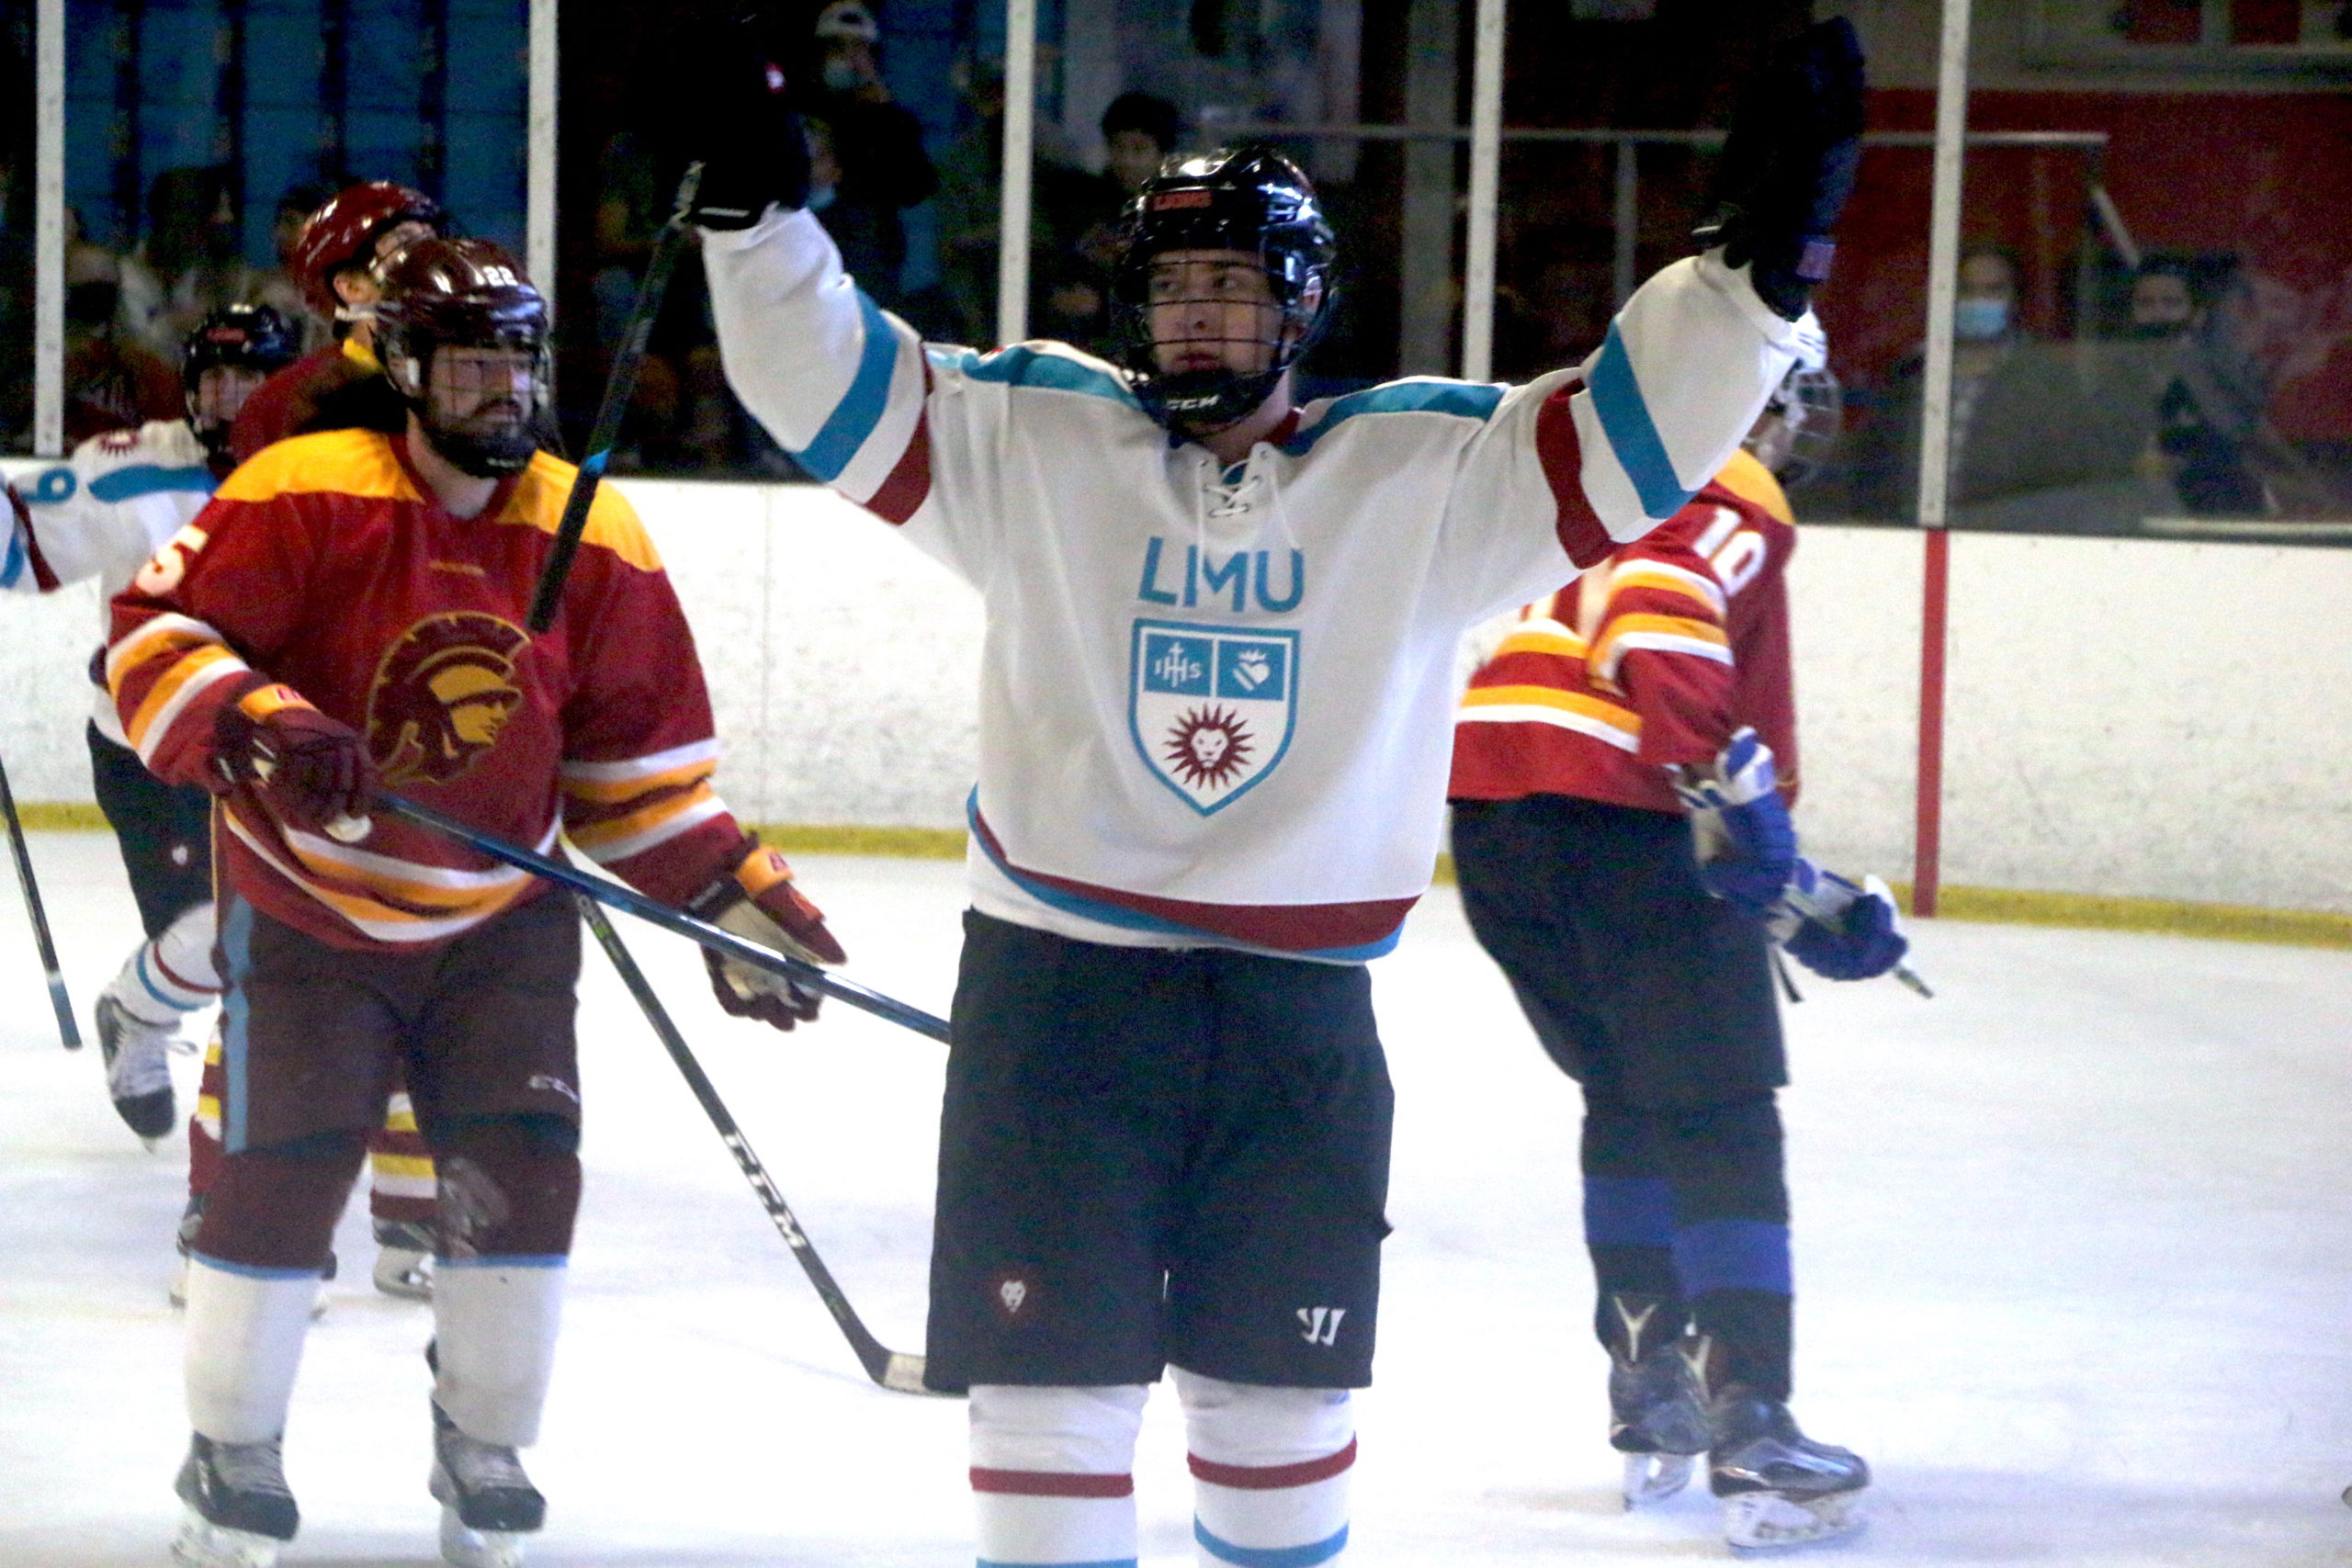 IMG 0308 scaled 1 - Men’s Ice Hockey Hosts Fundraising Teddy Bear Toss